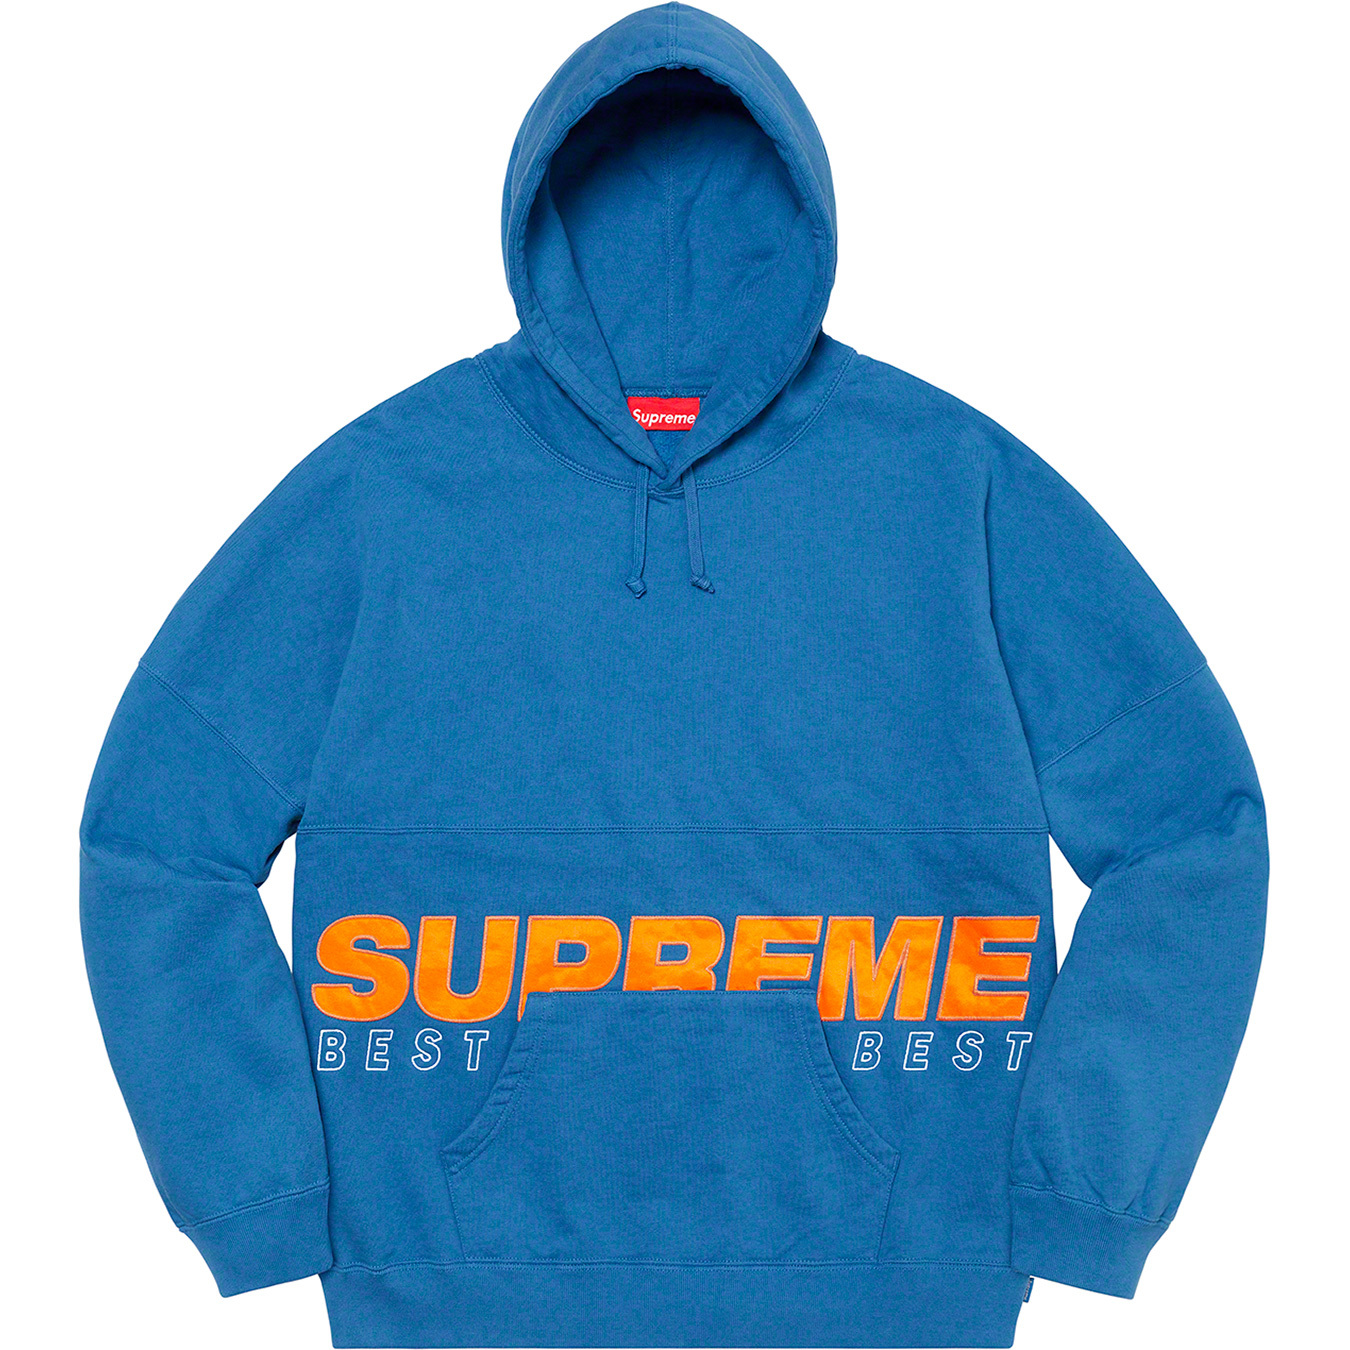 Best Of The Best Hooded Sweatshirt - fall winter 2020 - Supreme